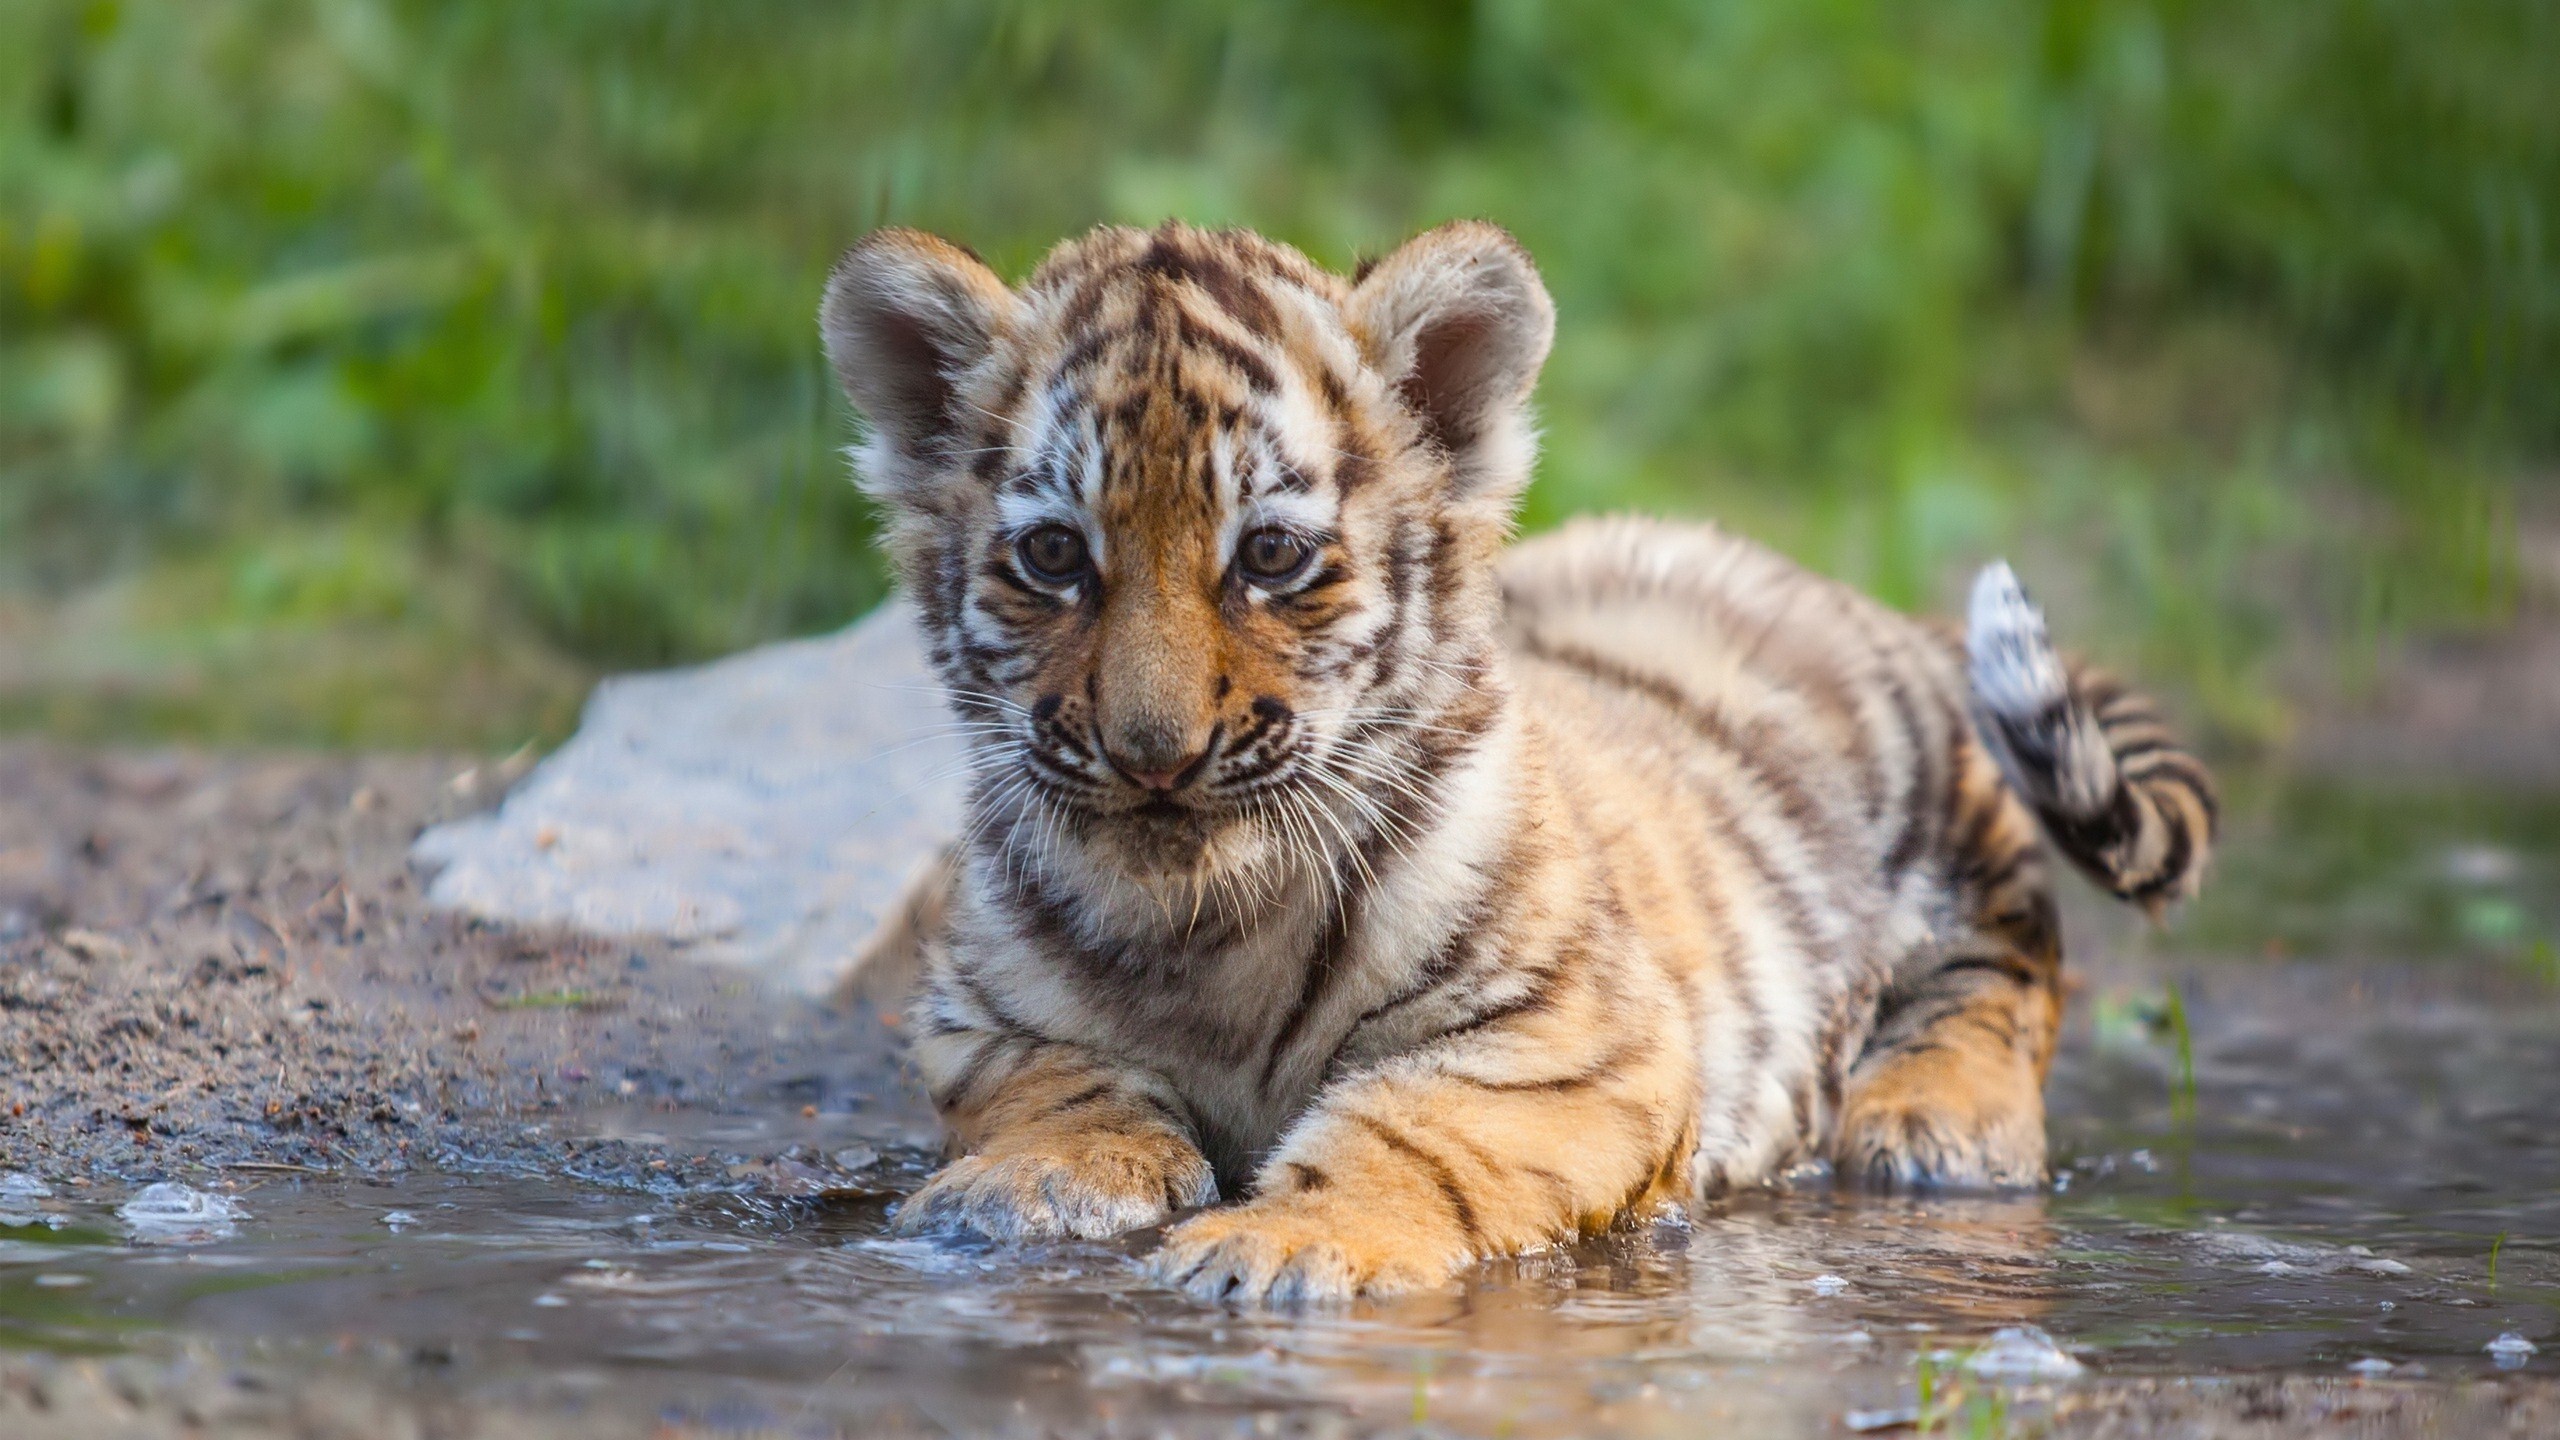 Tiger Cub: Cute animals, Water, Stripes, Predator, Big cat's baby. 2560x1440 HD Wallpaper.